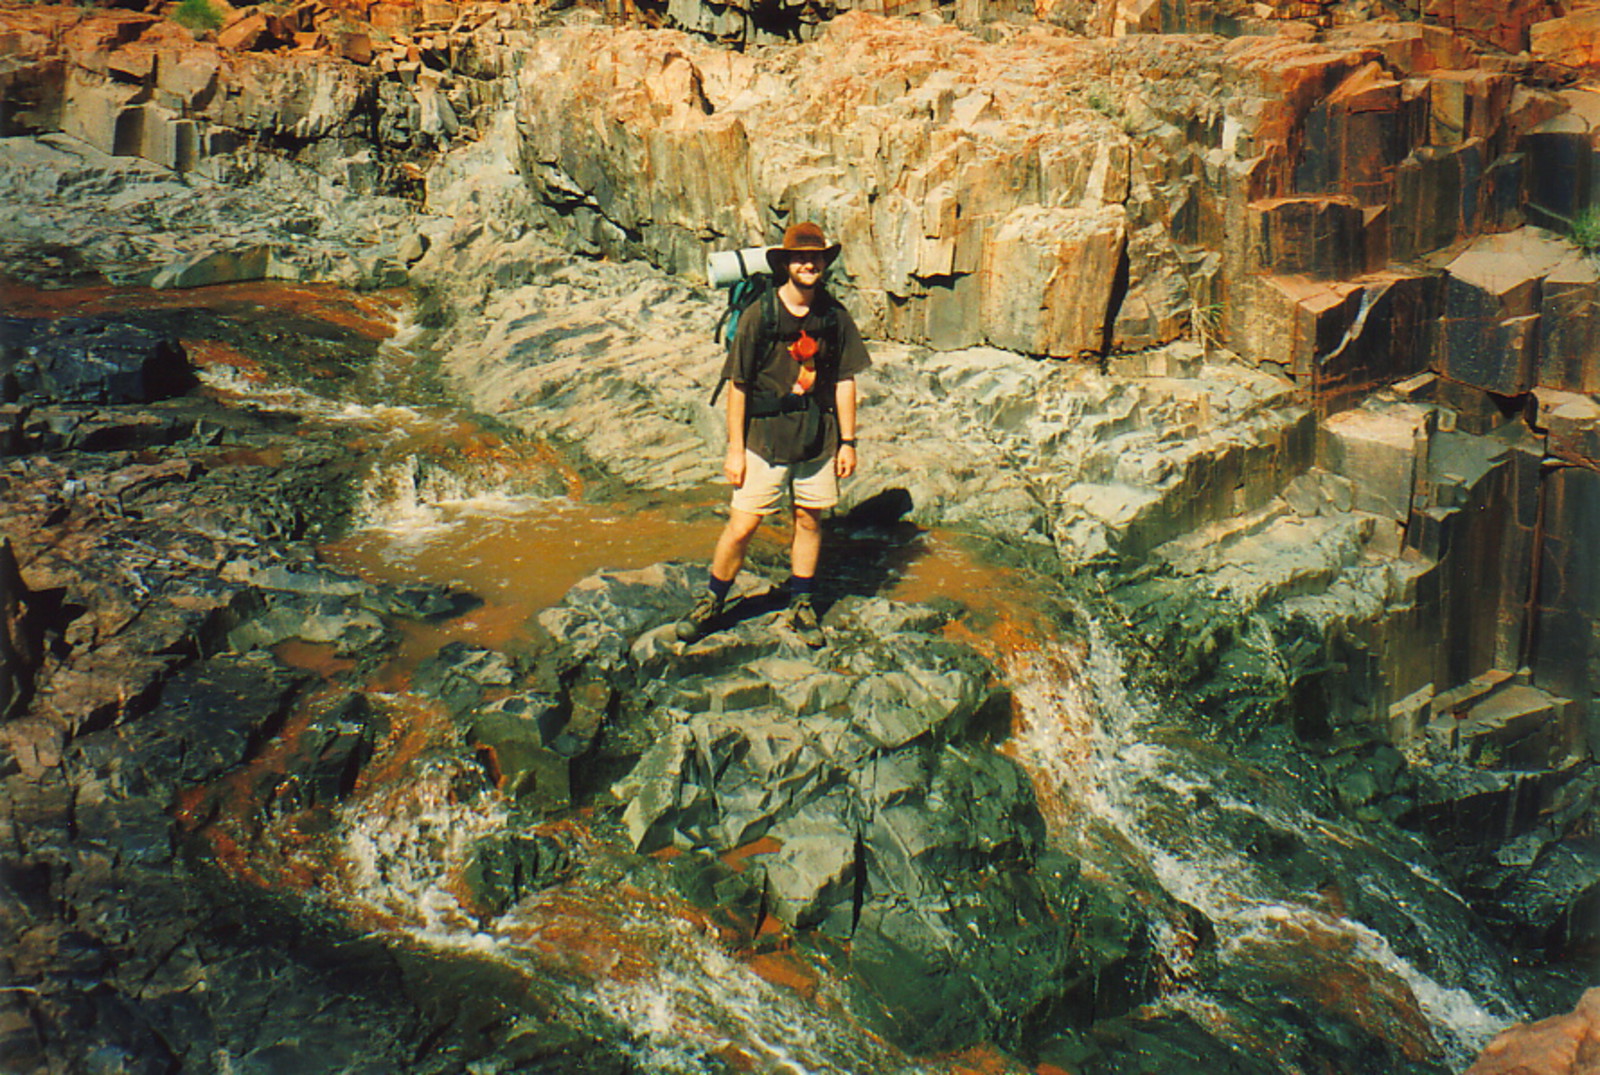 Mark crossing a slippery outback creek